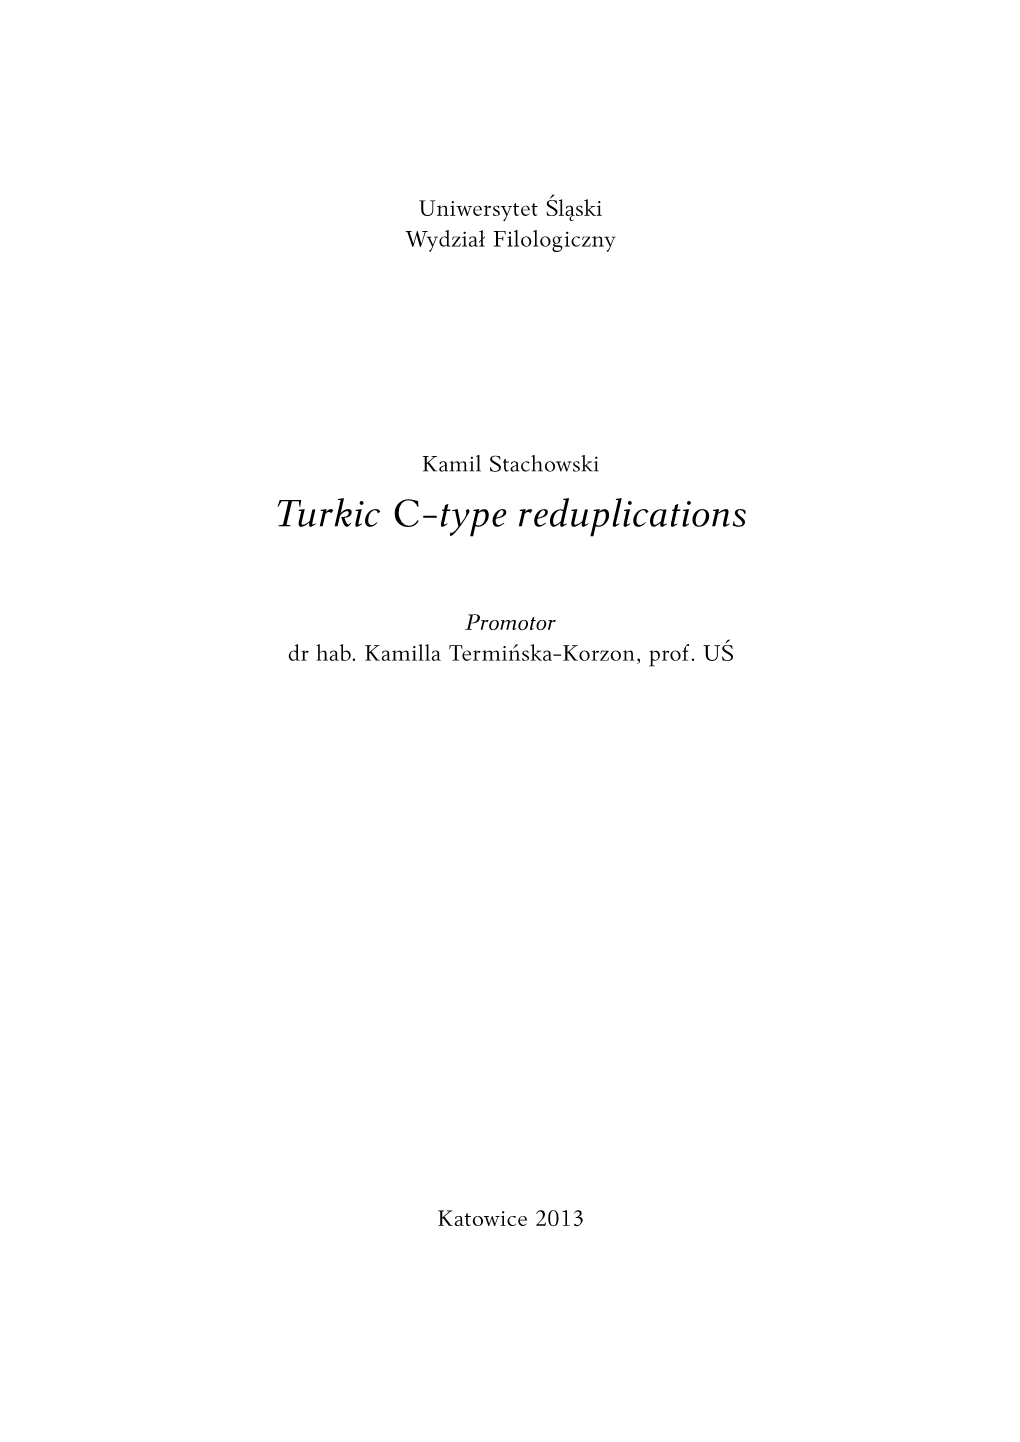 Turkic C-Type Reduplications